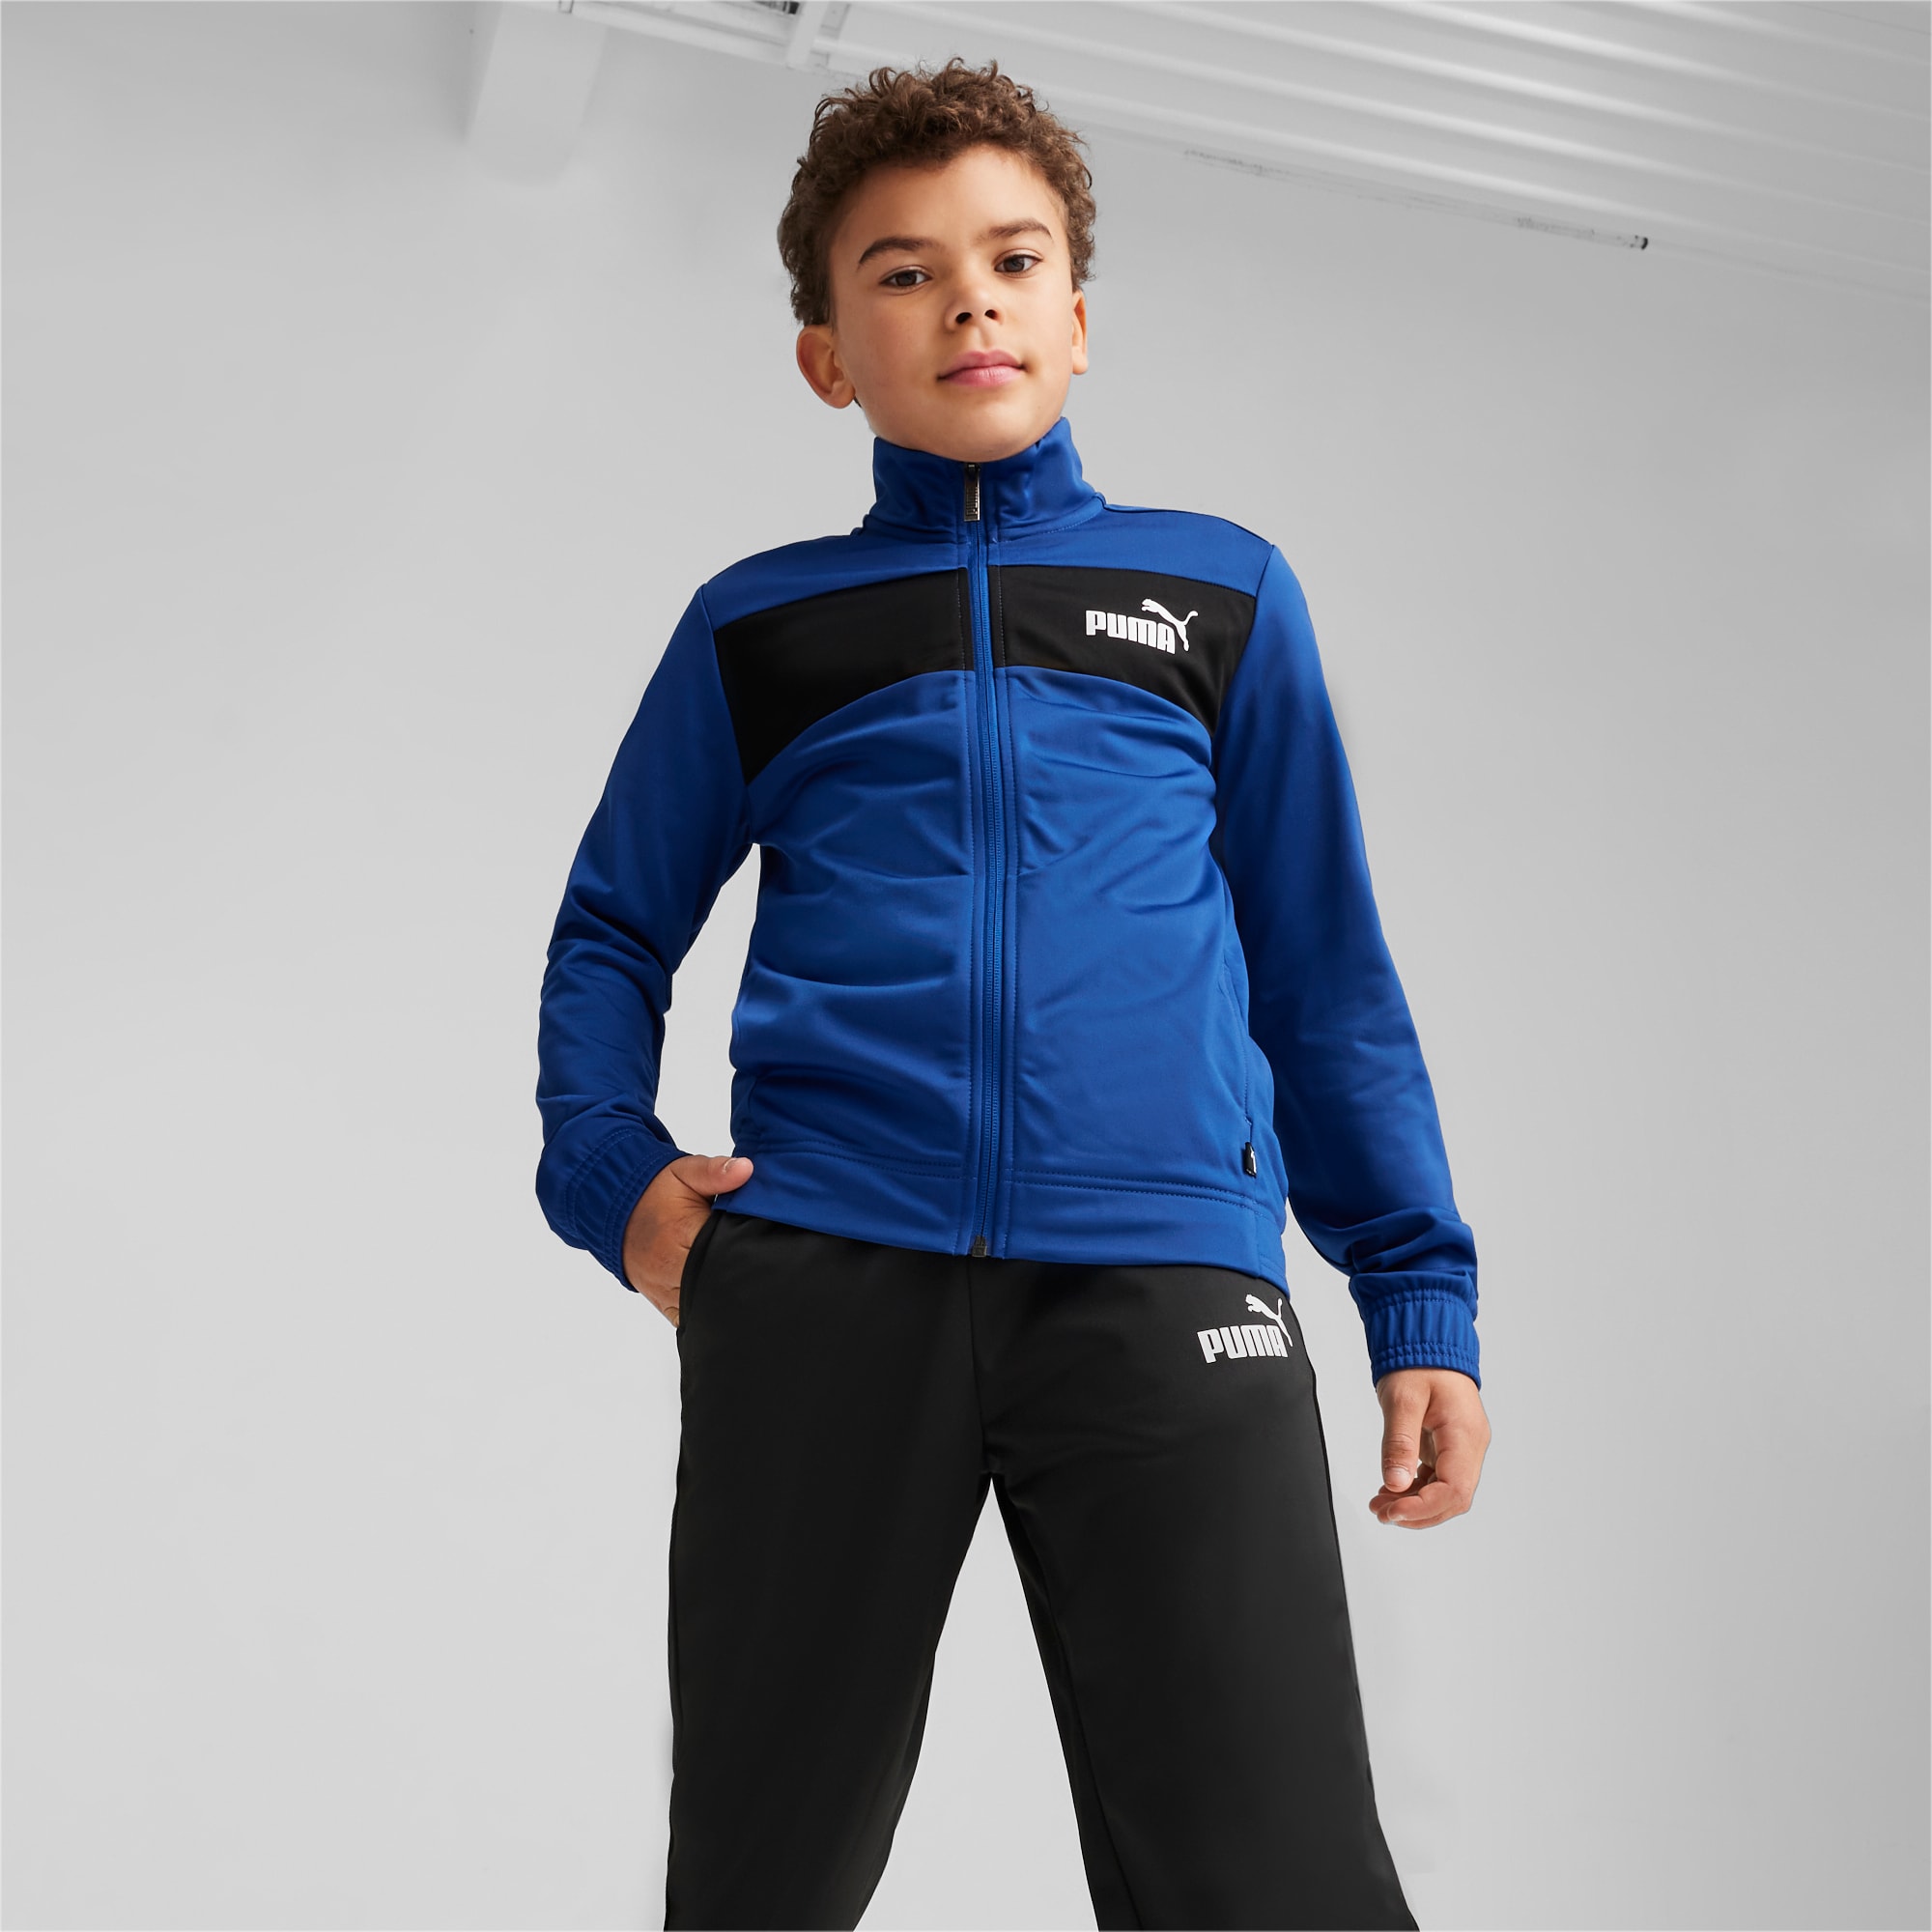 PUMA Jugend-Trainingsanzug Aus Polyester Für Kinder, Blau, Größe: 104, Kleidung